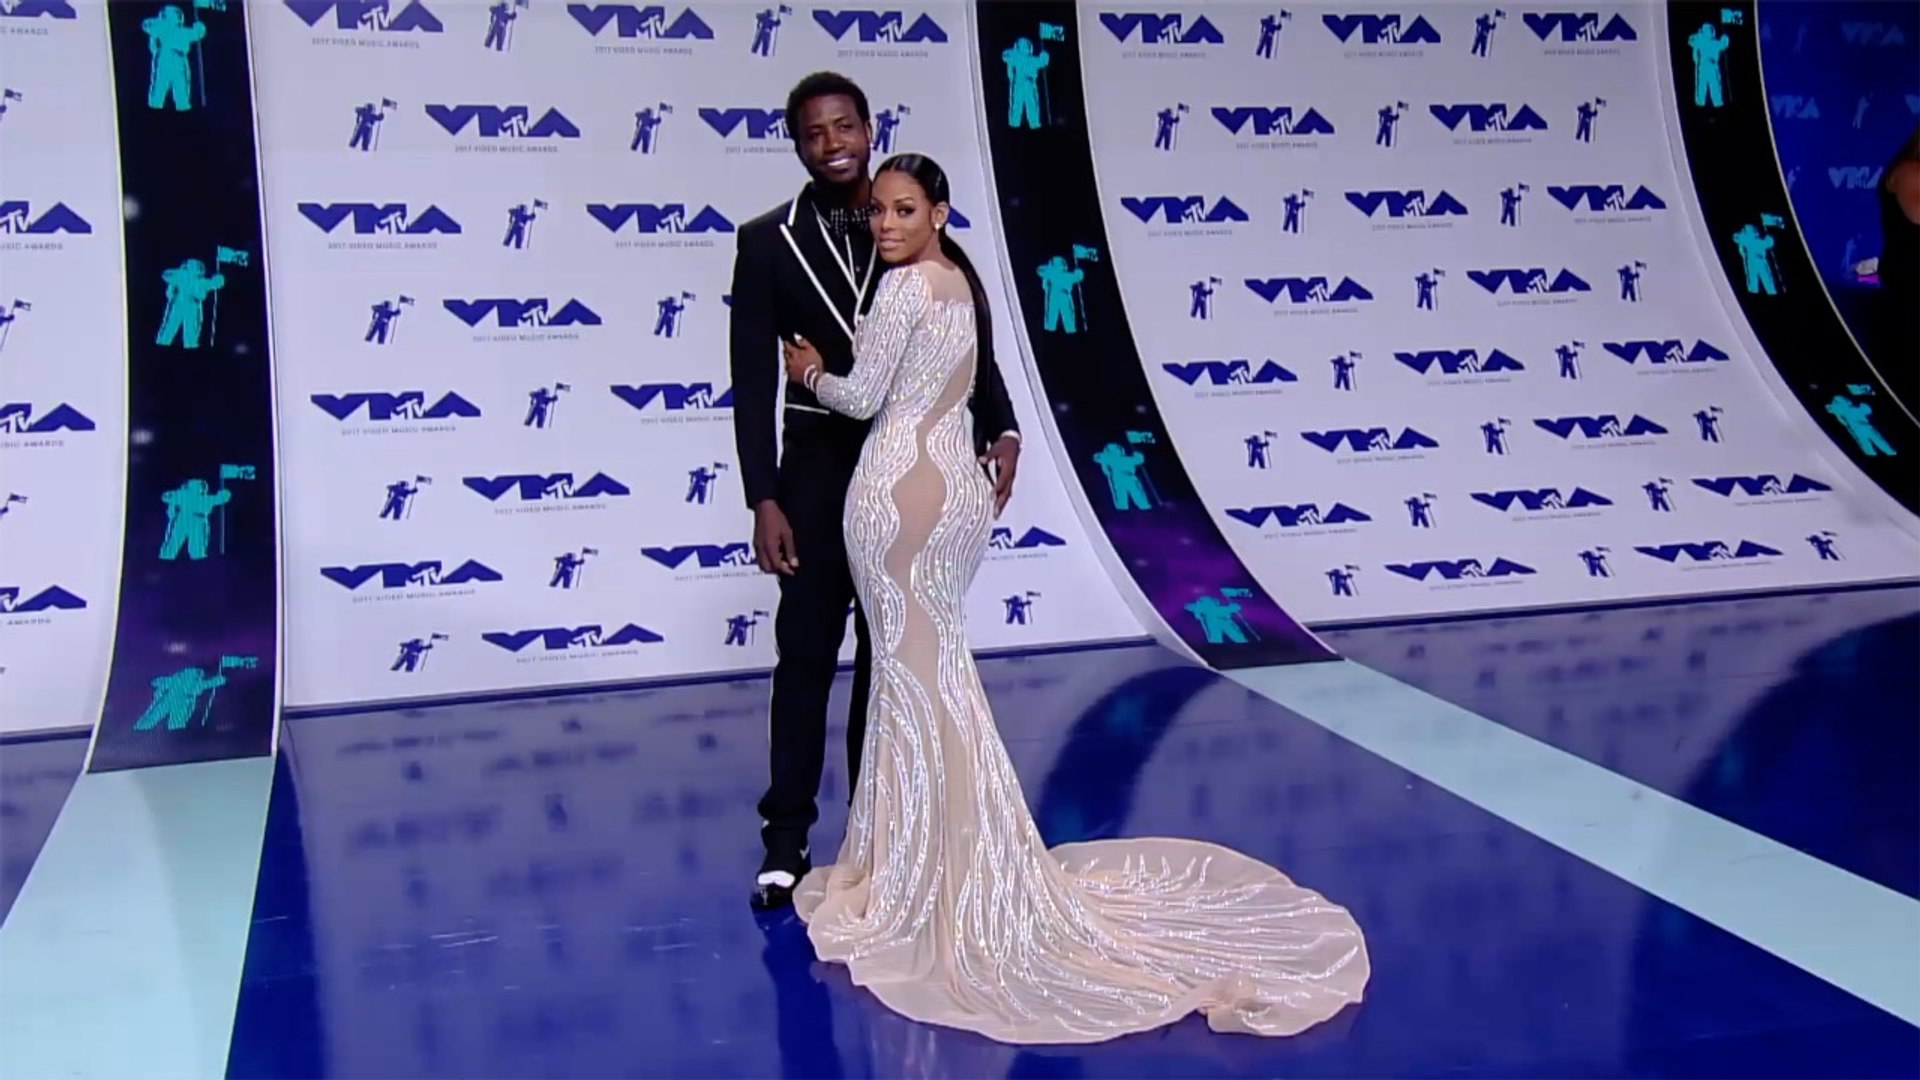 Gucci Mane And Keyshia Ka'Oir Serve Consistency On The VMA's Red Carpet